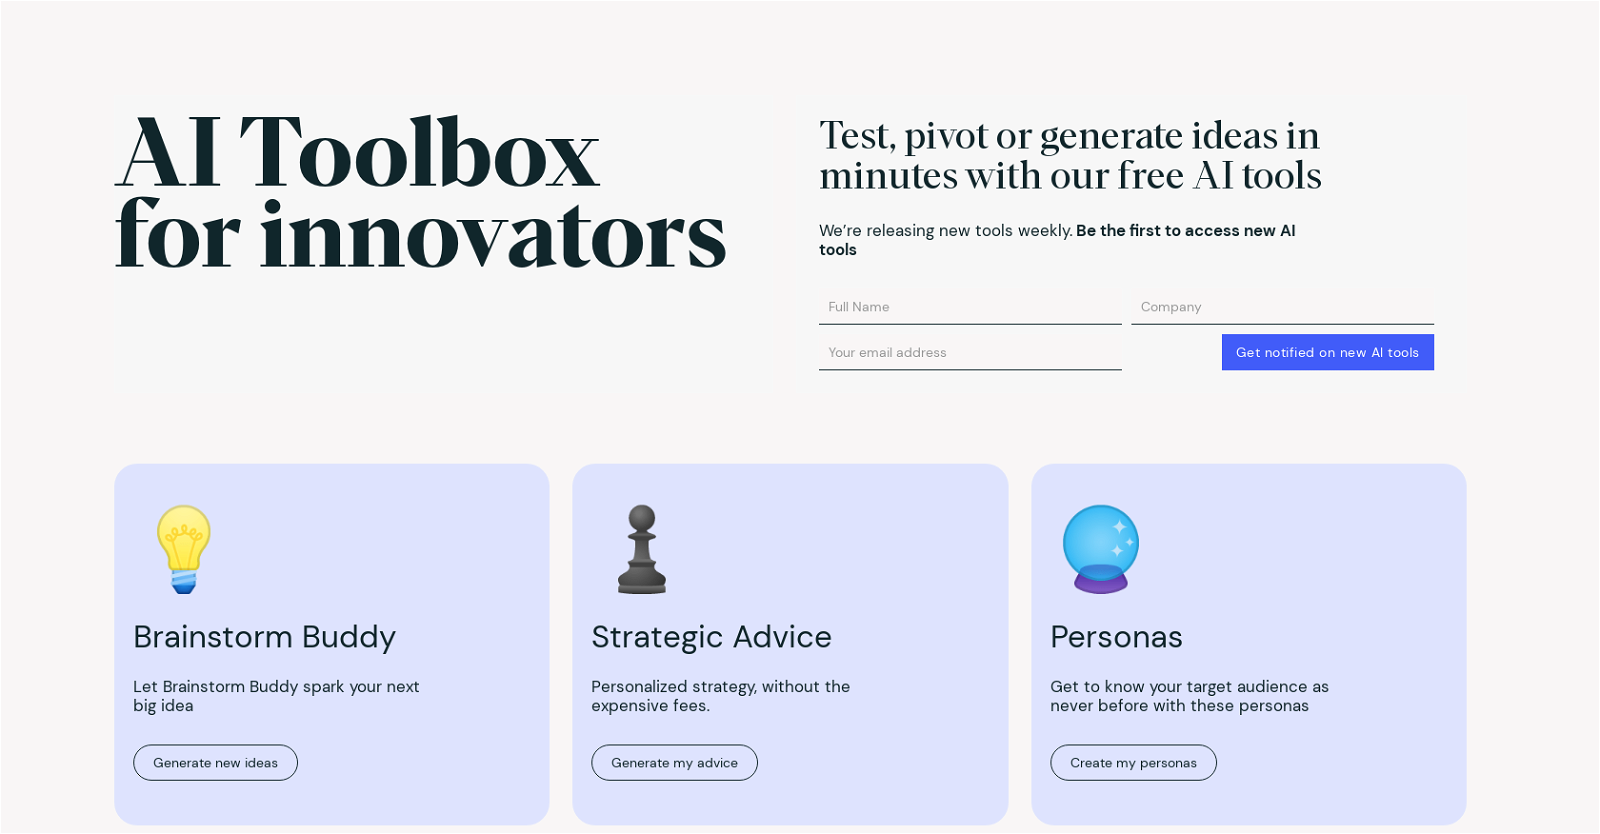 AI Toolbox for innovators
.